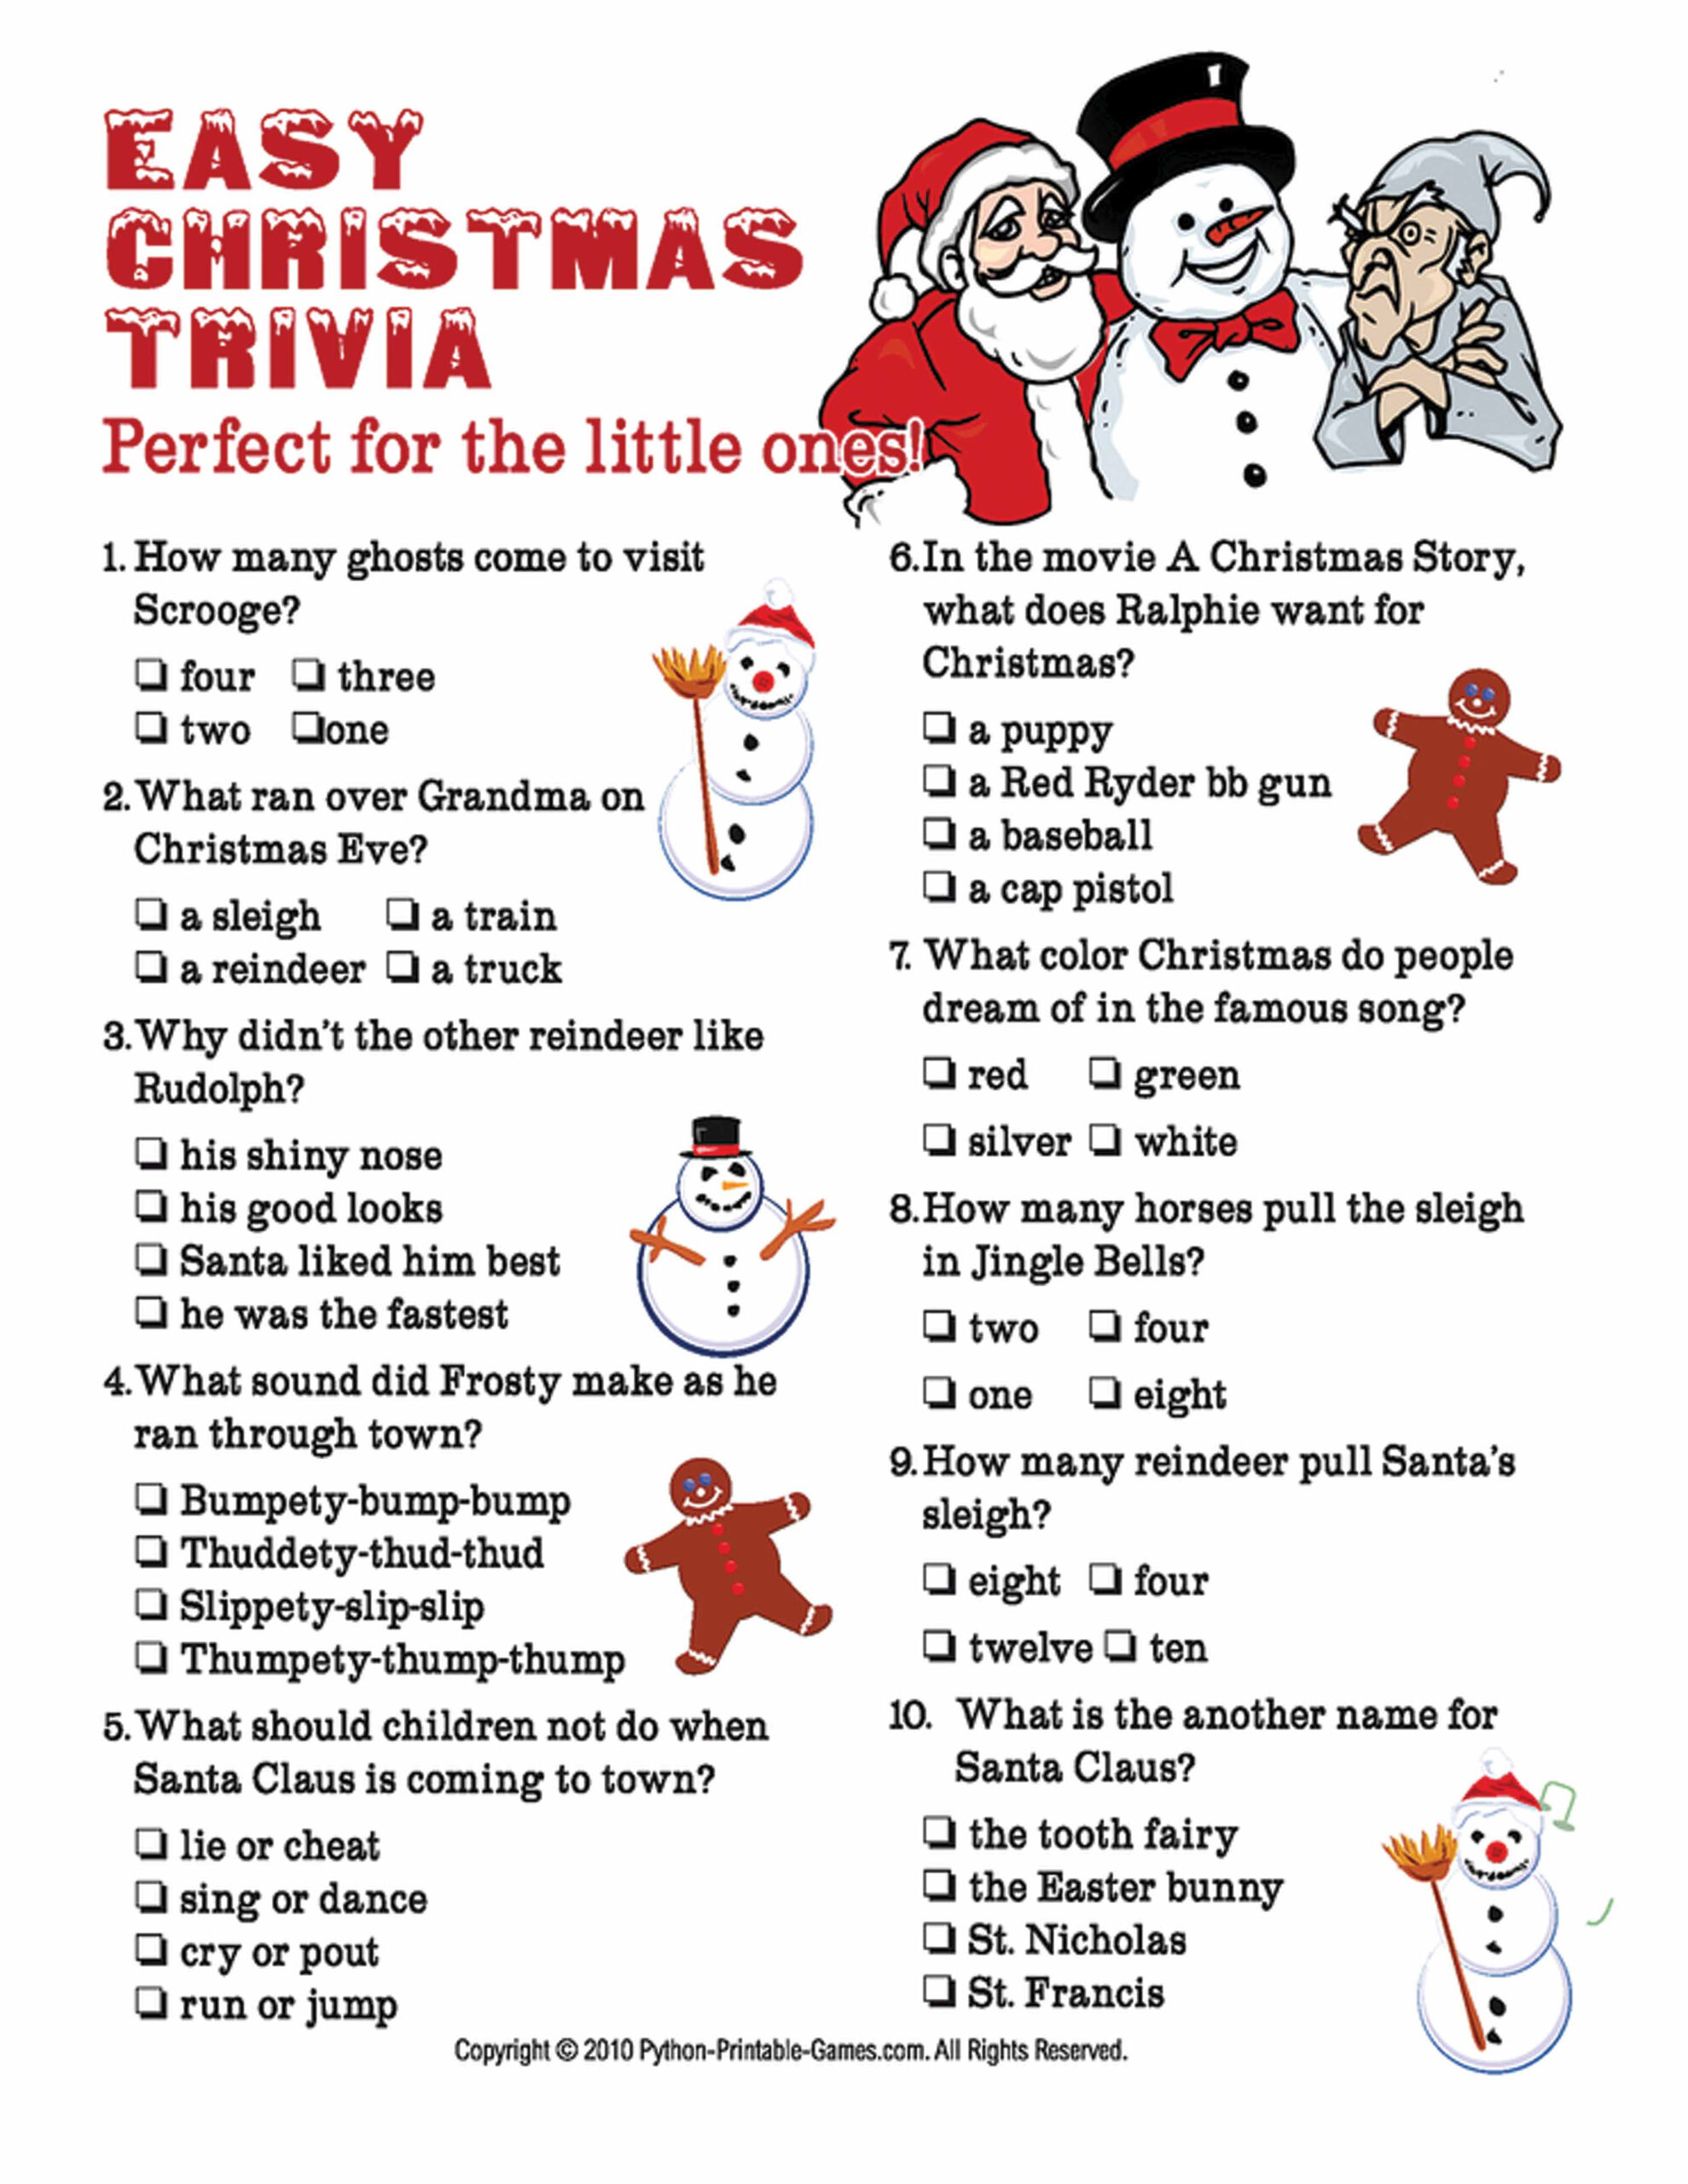 Easy Christmas Trivia Questions